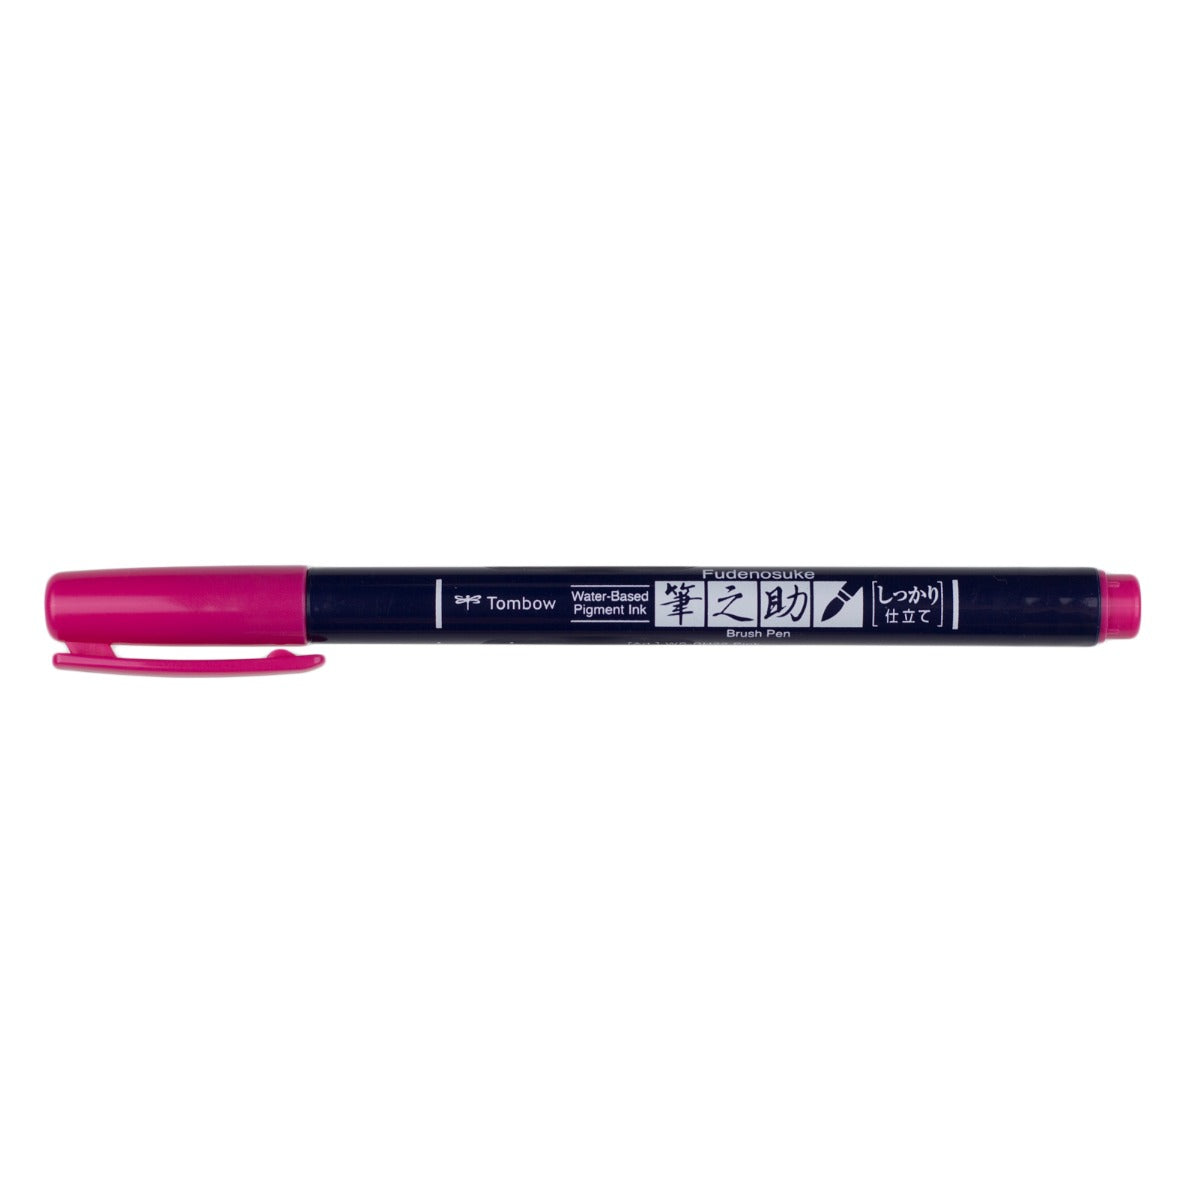 Tombow Fudenosuke Pink Brush Pen